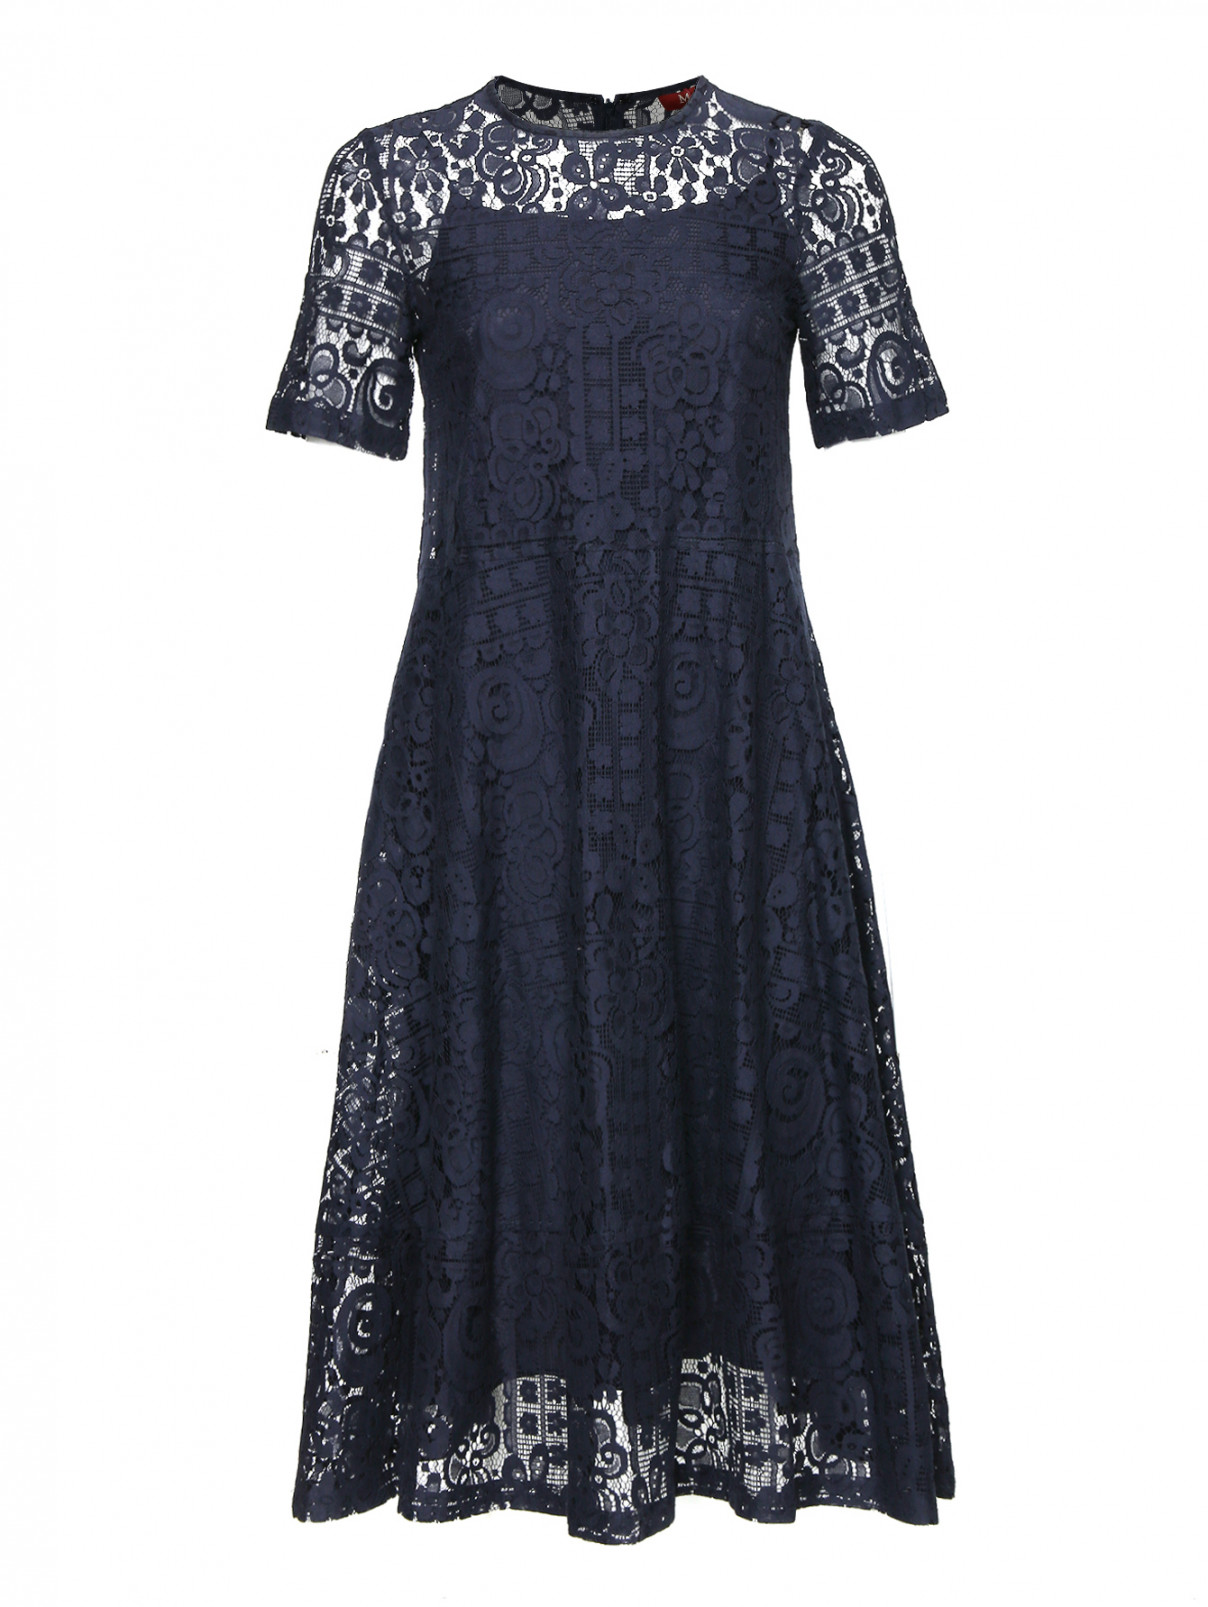 Платье-миди из кружева Max Mara  –  Общий вид  – Цвет:  Синий